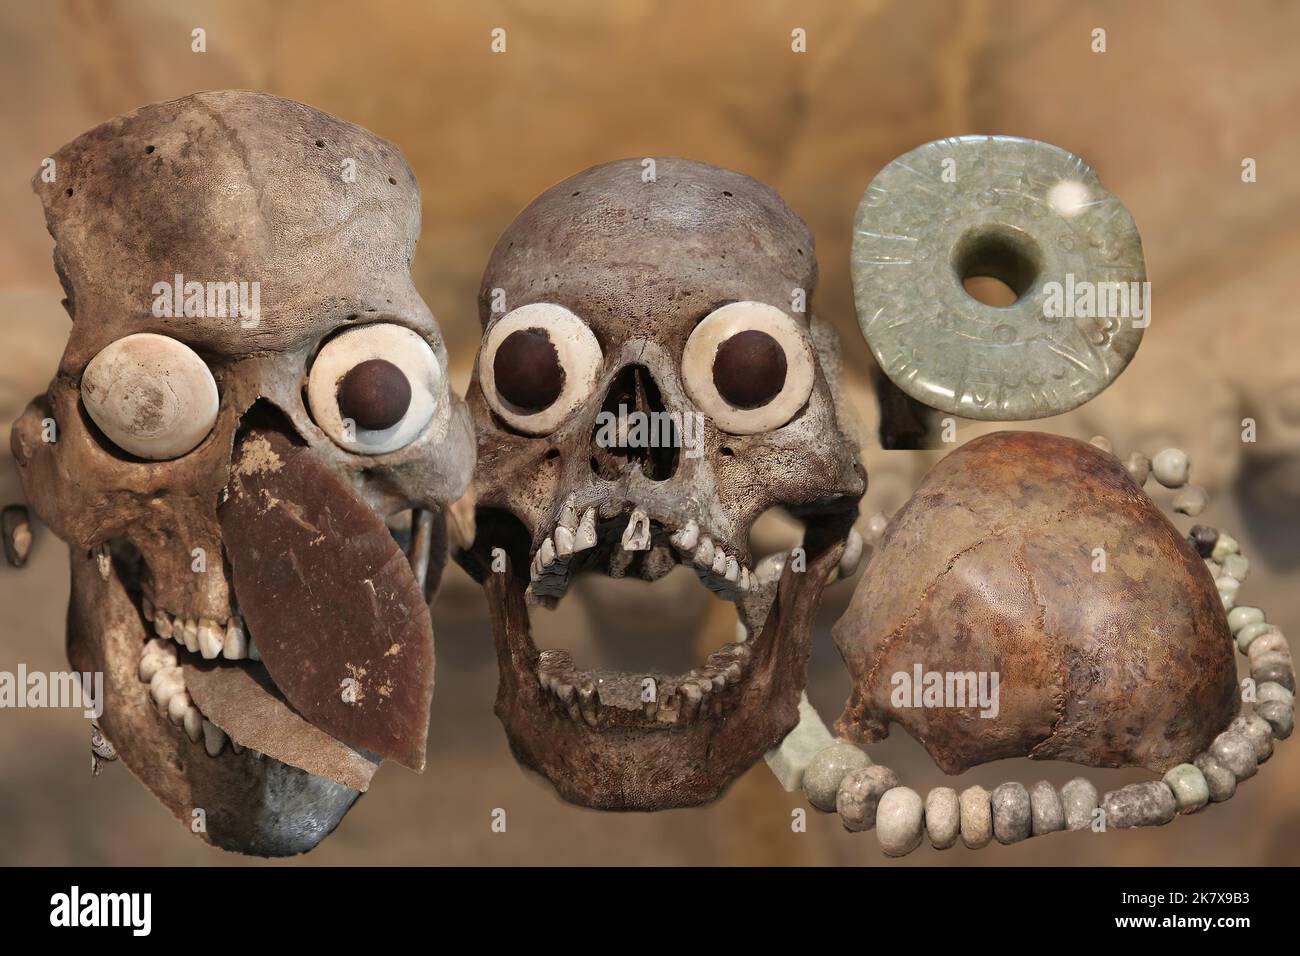 Human sacrifices - Skulls of sacrificial victims on offer to the Aztec deities Stock Photo